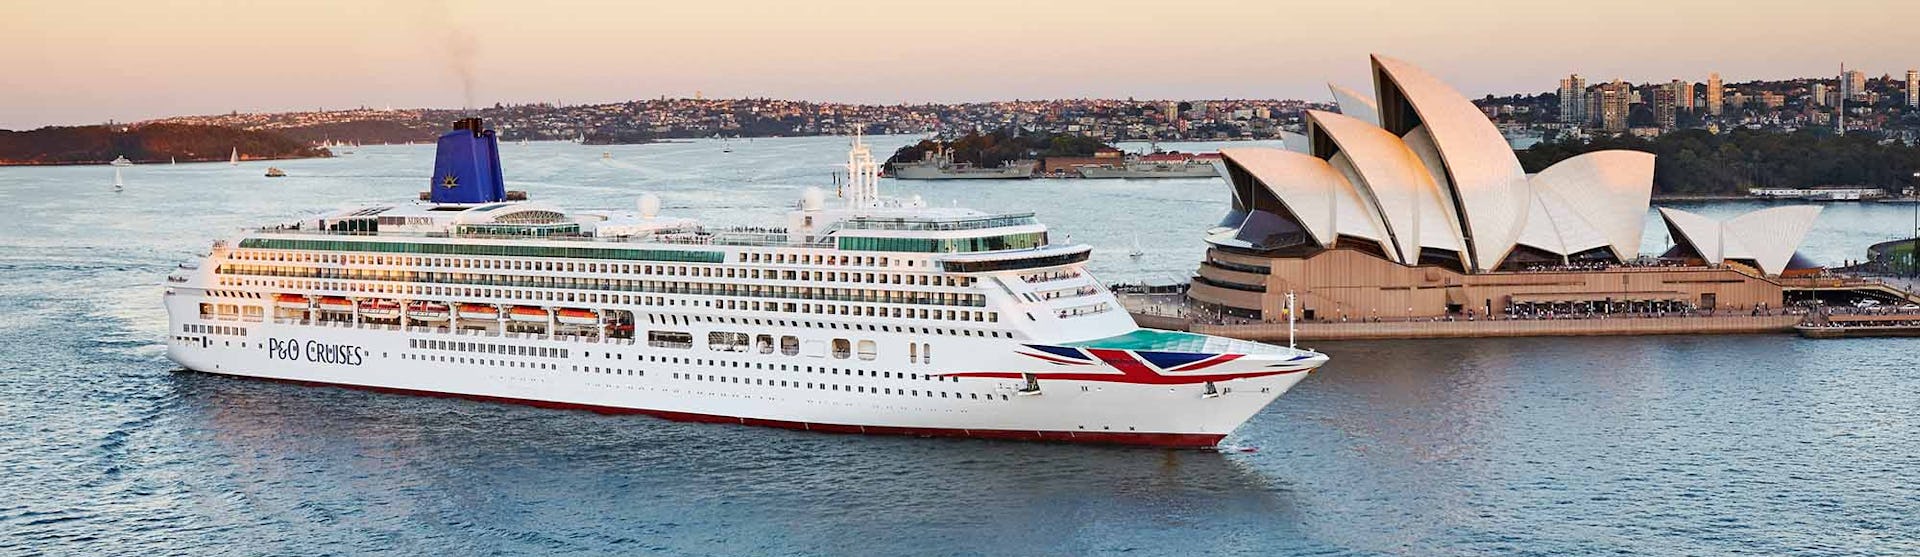 P&O Cruises ship, Aurora, outside the Sydney Opera House